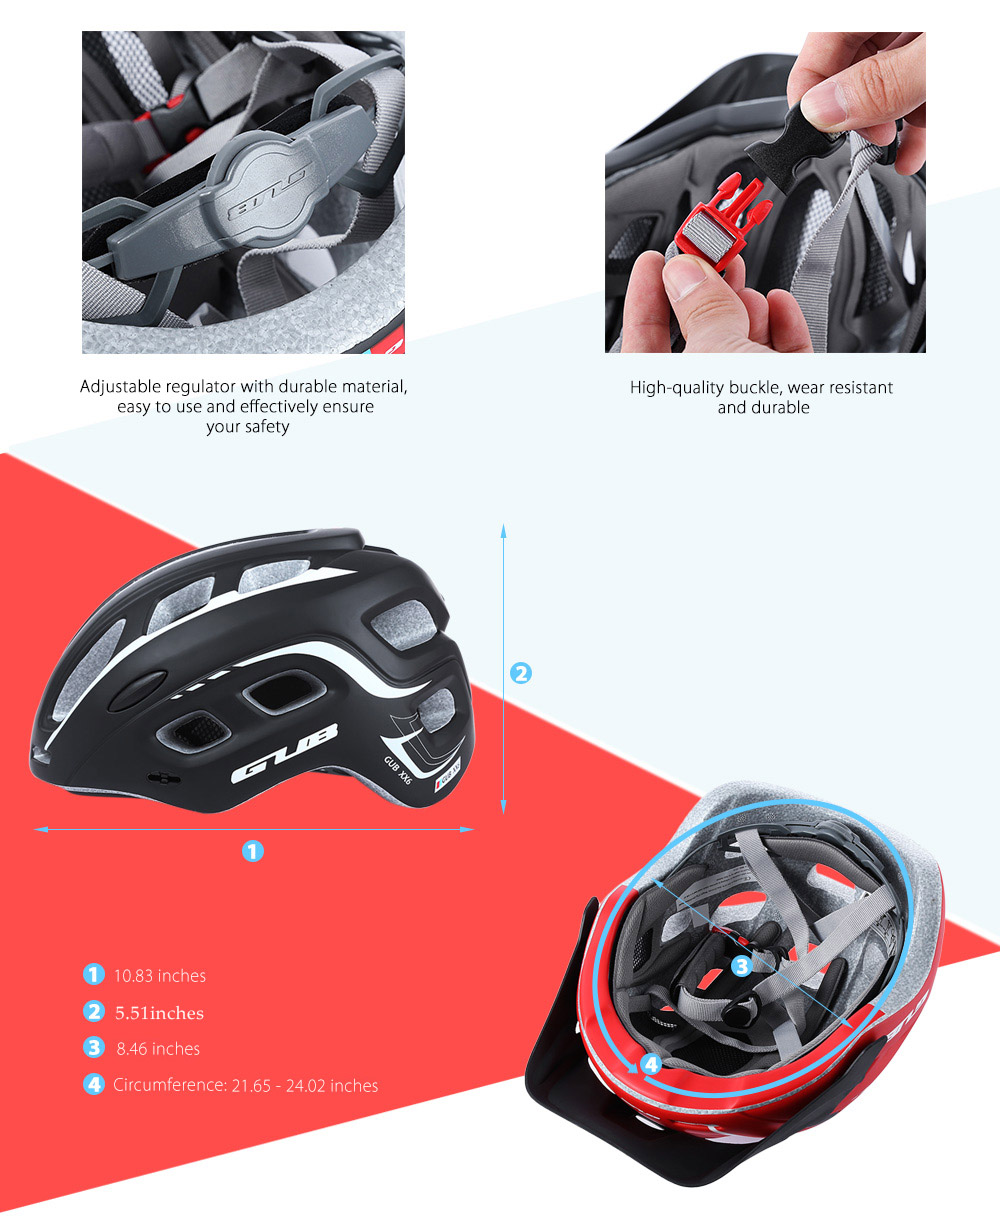 GUB XX6 55 - 61CM Adult Safety Cycling Bike 19 Air Vent Helmet with Visor